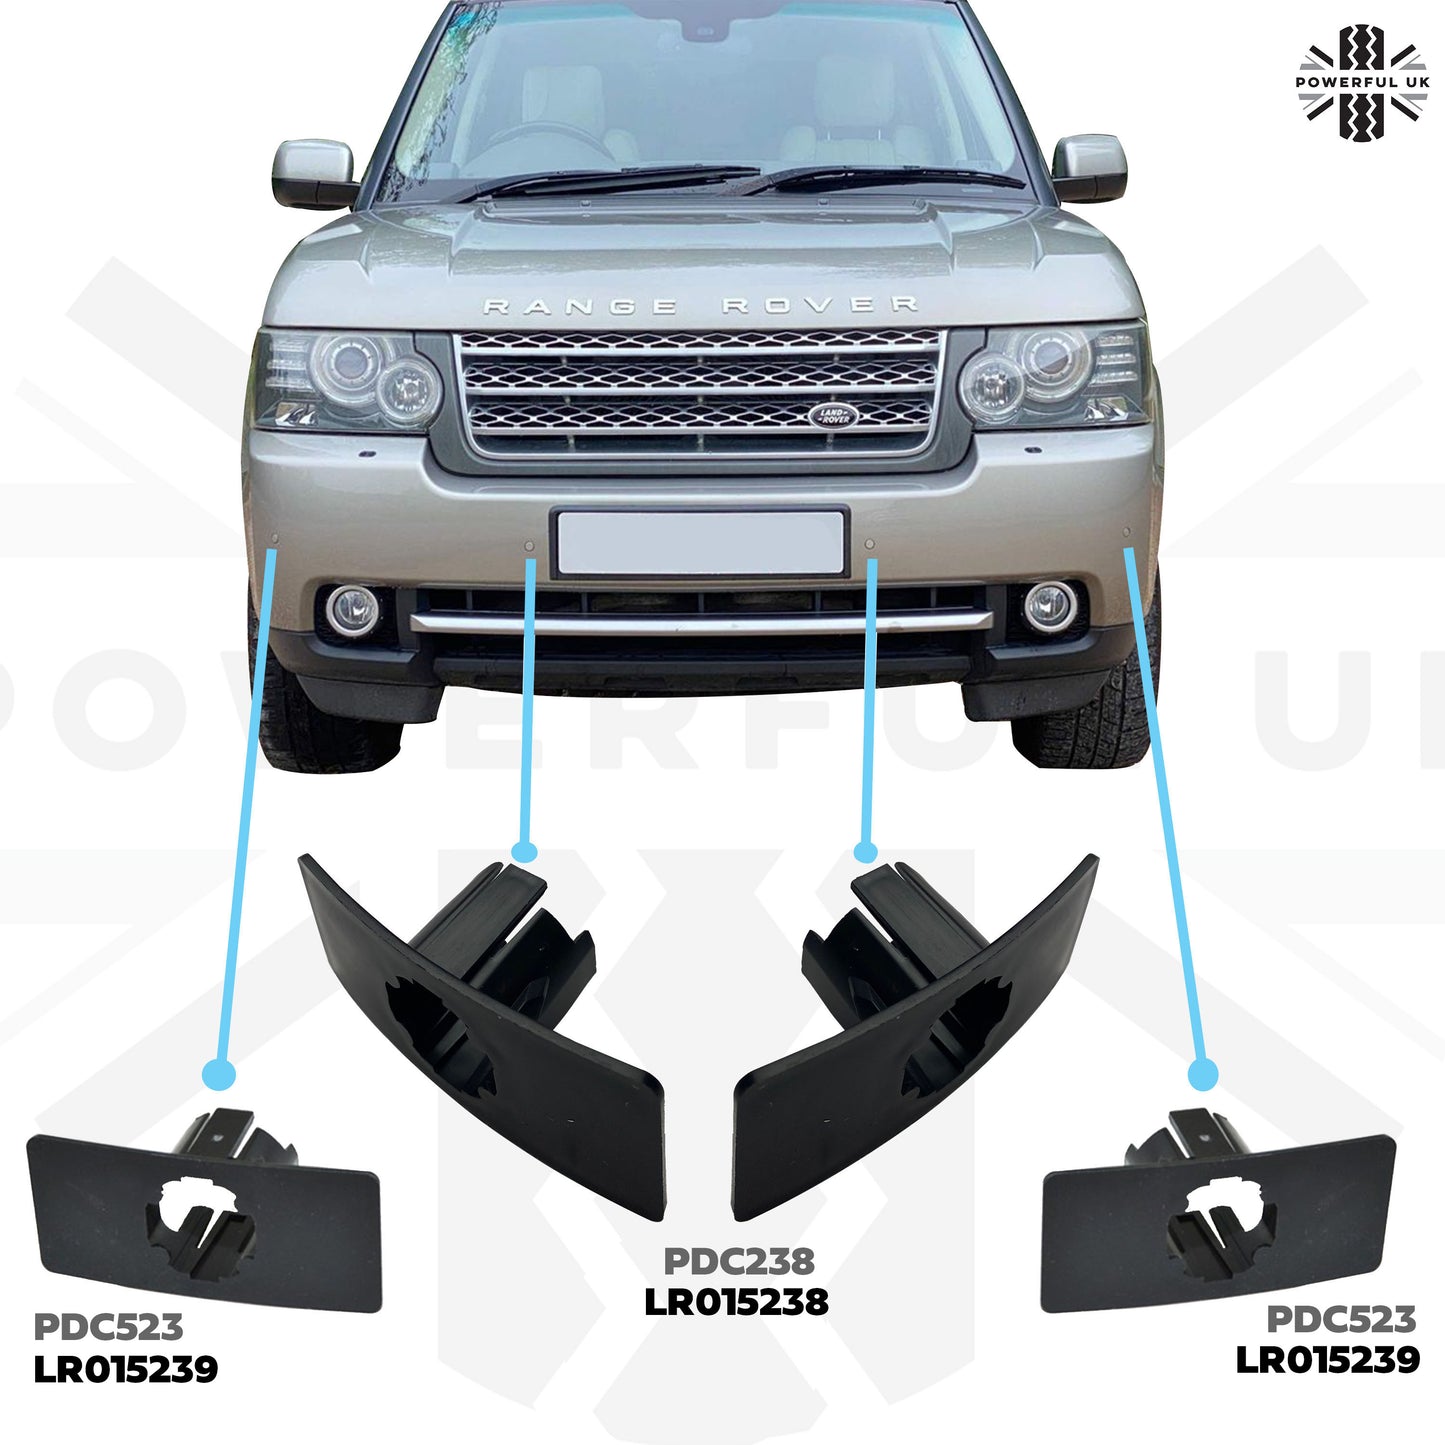 Genuine Parking Sensor Holders for Front Bumper for Range Rover L322 - Pair